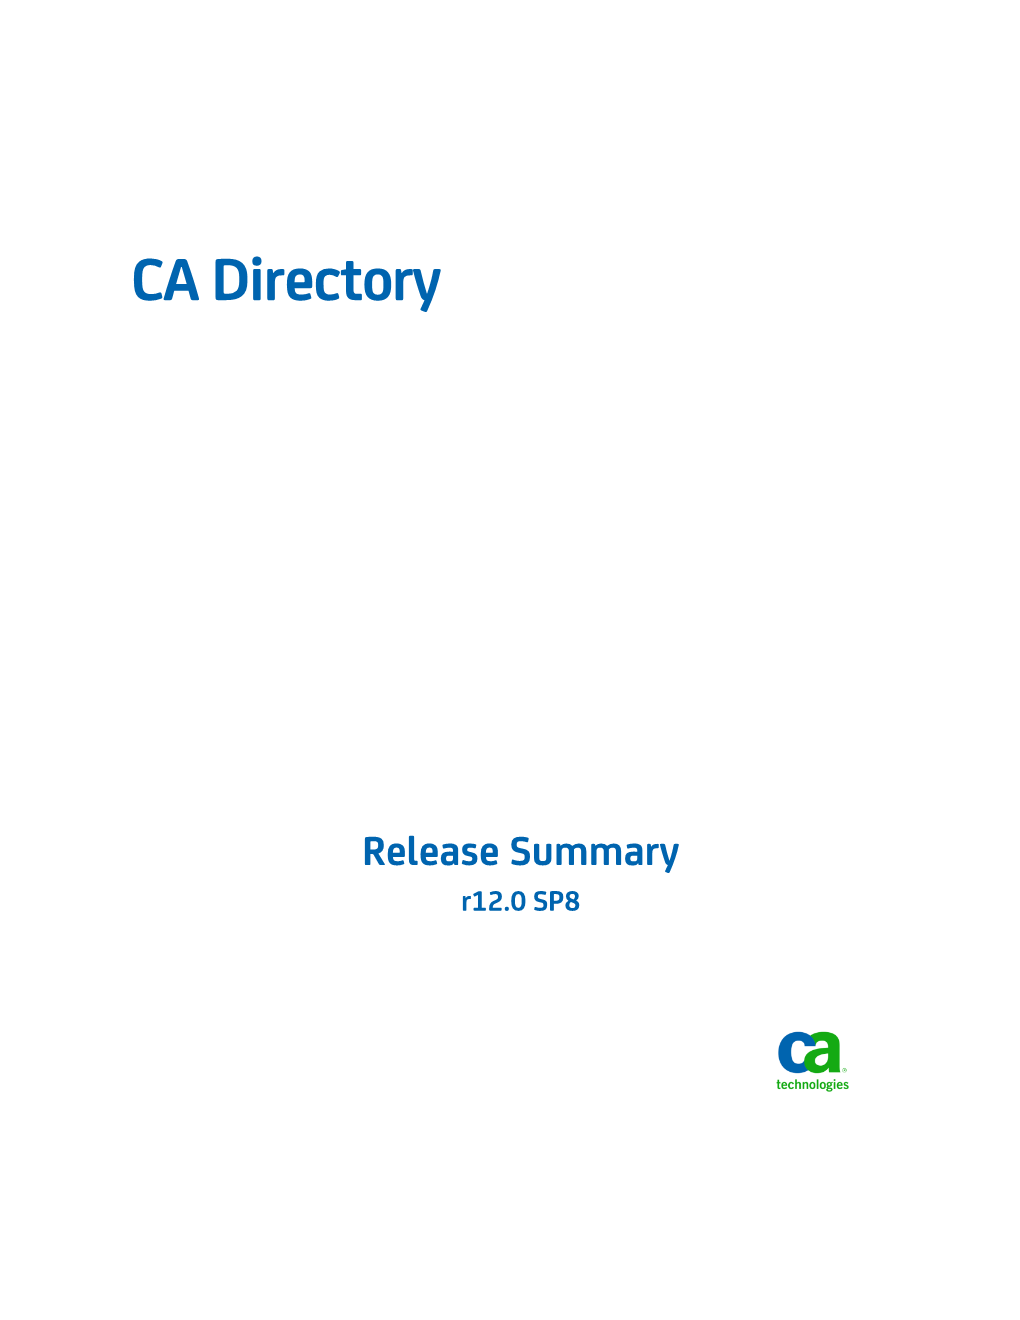 CA Directory Release Summary